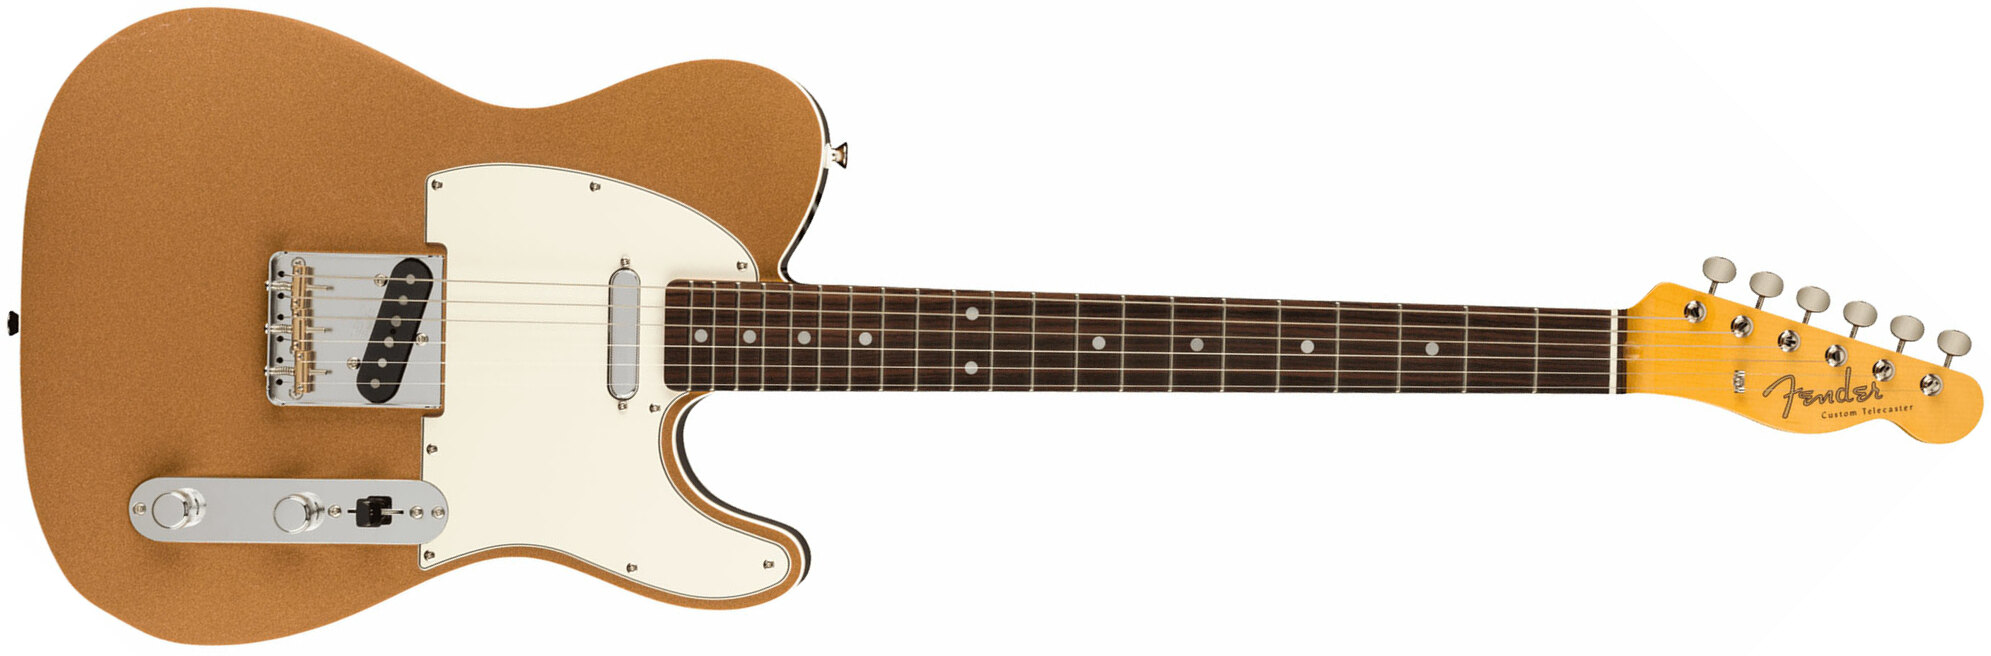 Fender Tele Custom '60s Jv Modified Jap 2s Ht Rw - Firemist Gold - Tel shape electric guitar - Main picture